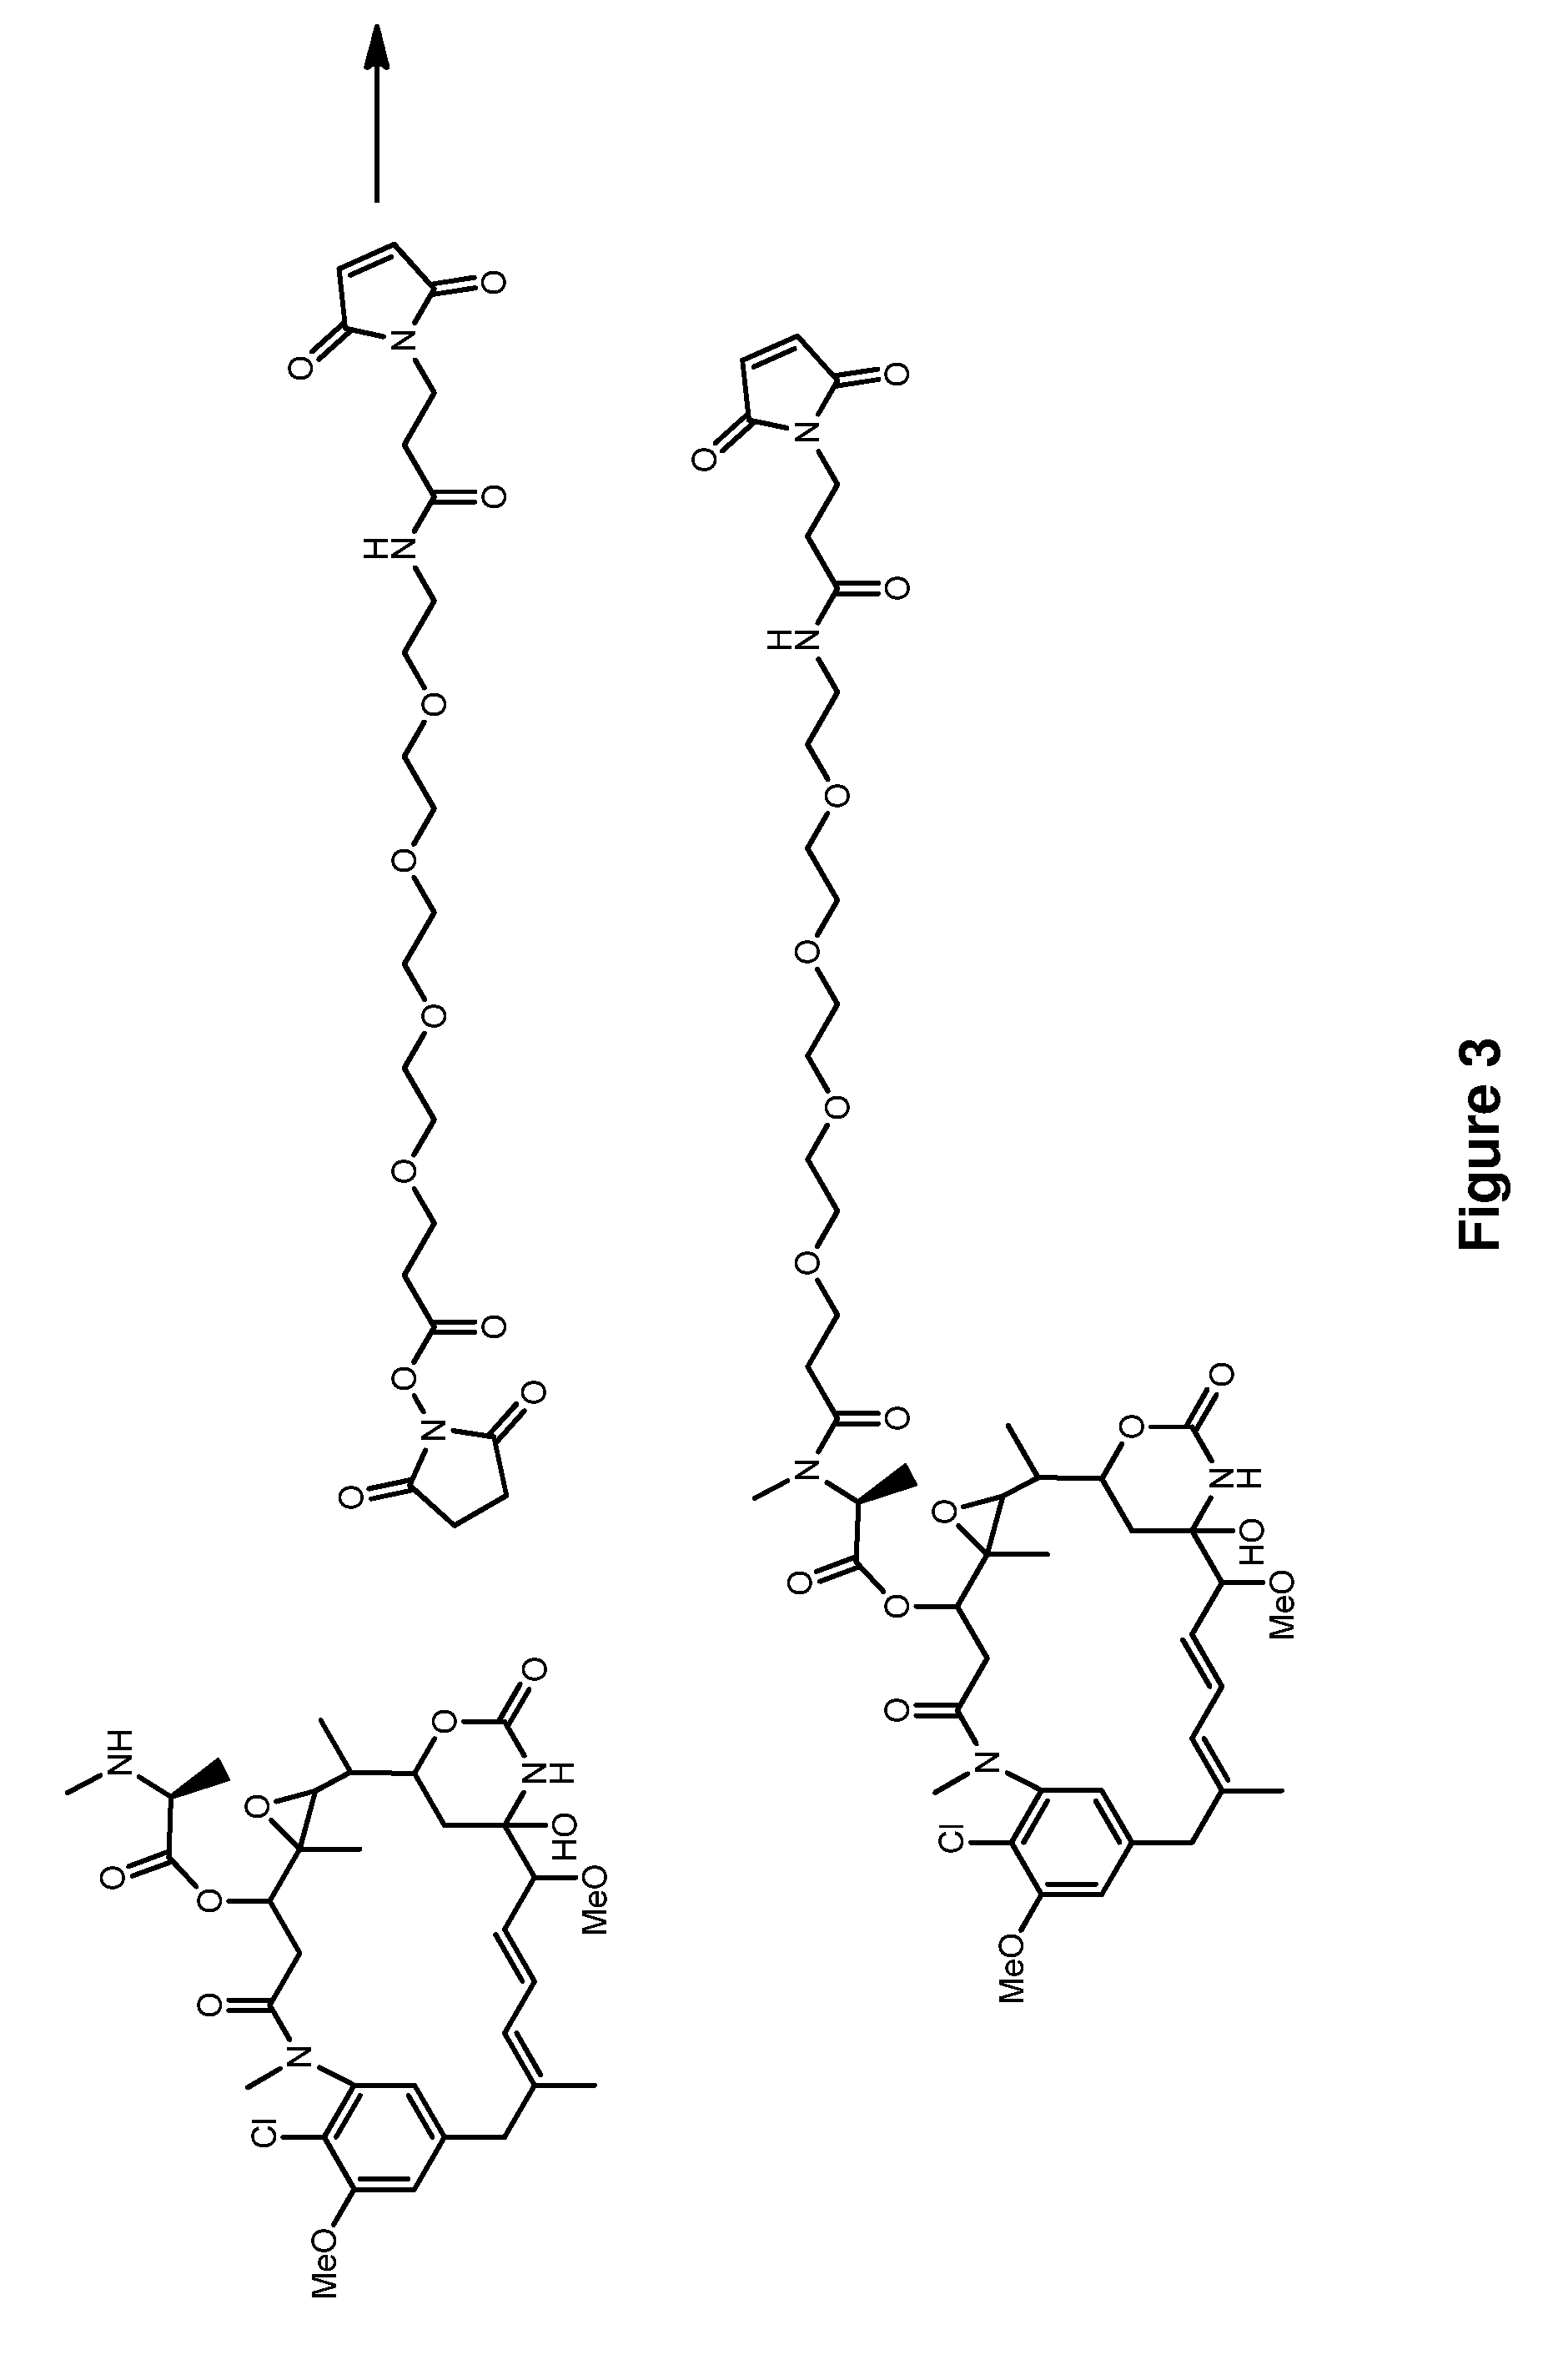 Methods for the acylation of maytansinol